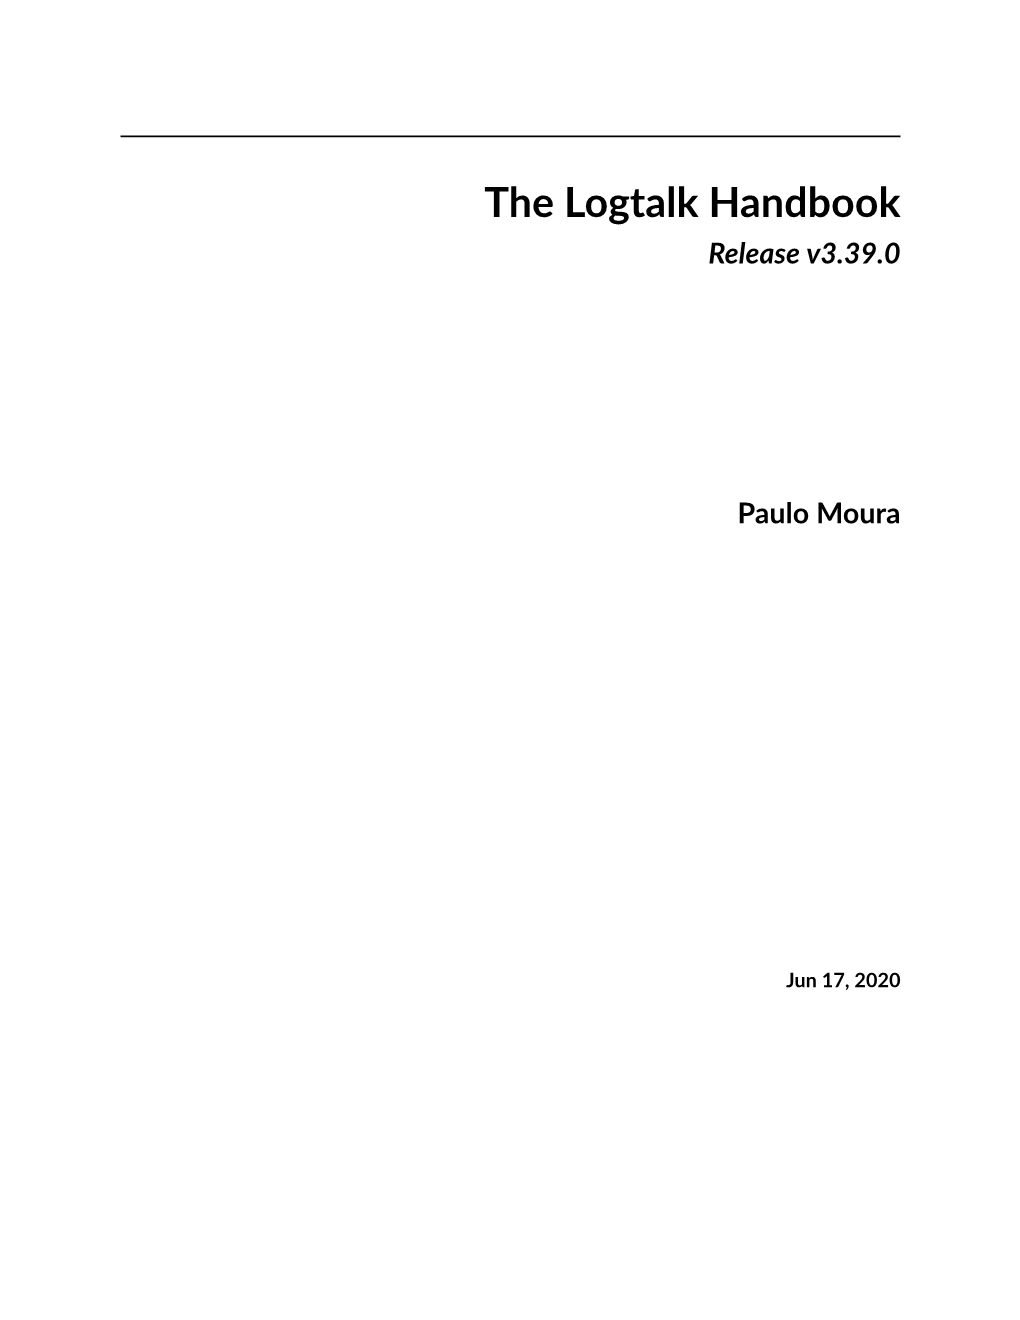 The Logtalk Handbook Release V3.39.0